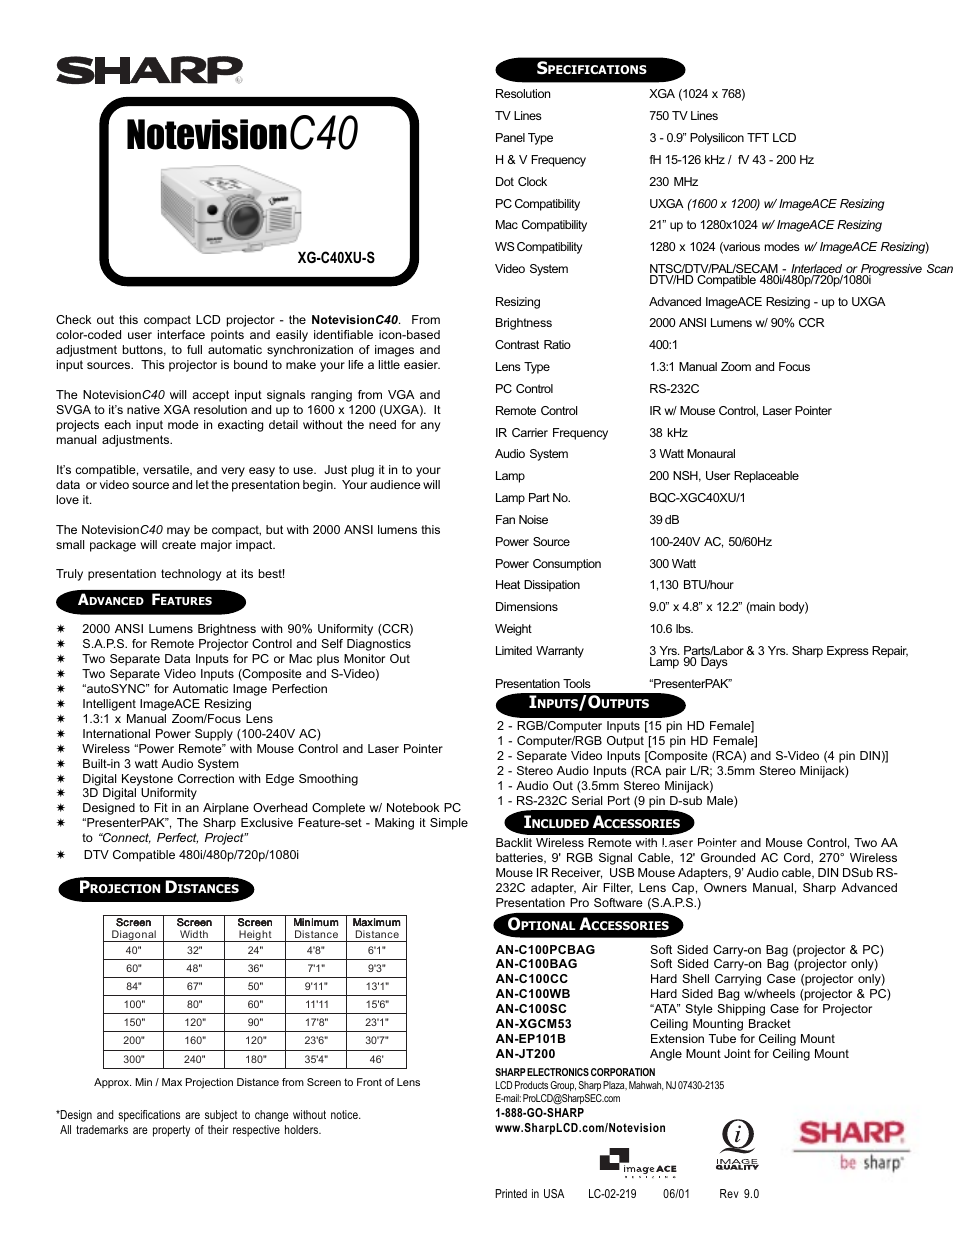 Sharp AN-C100PCBAG User Manual | 1 page